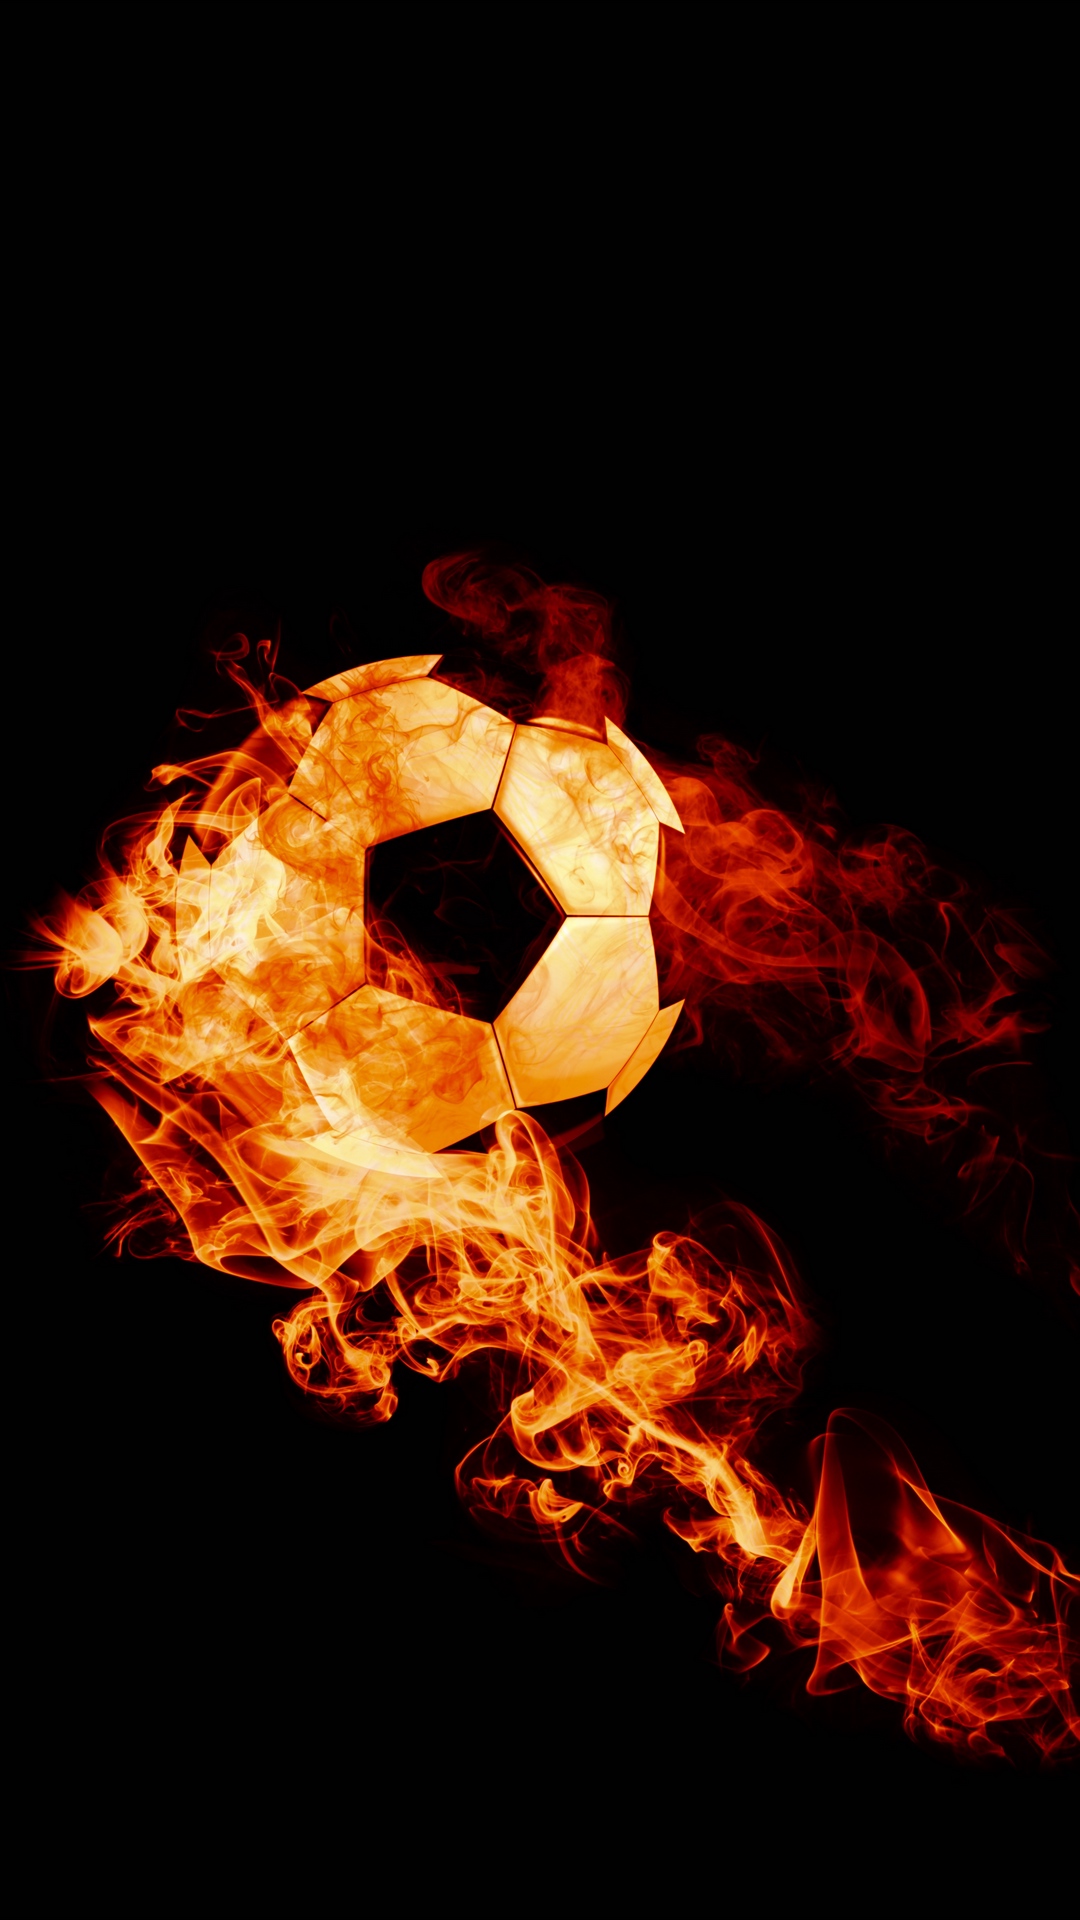 fire wallpaper,flame,fire,football,orange,heat